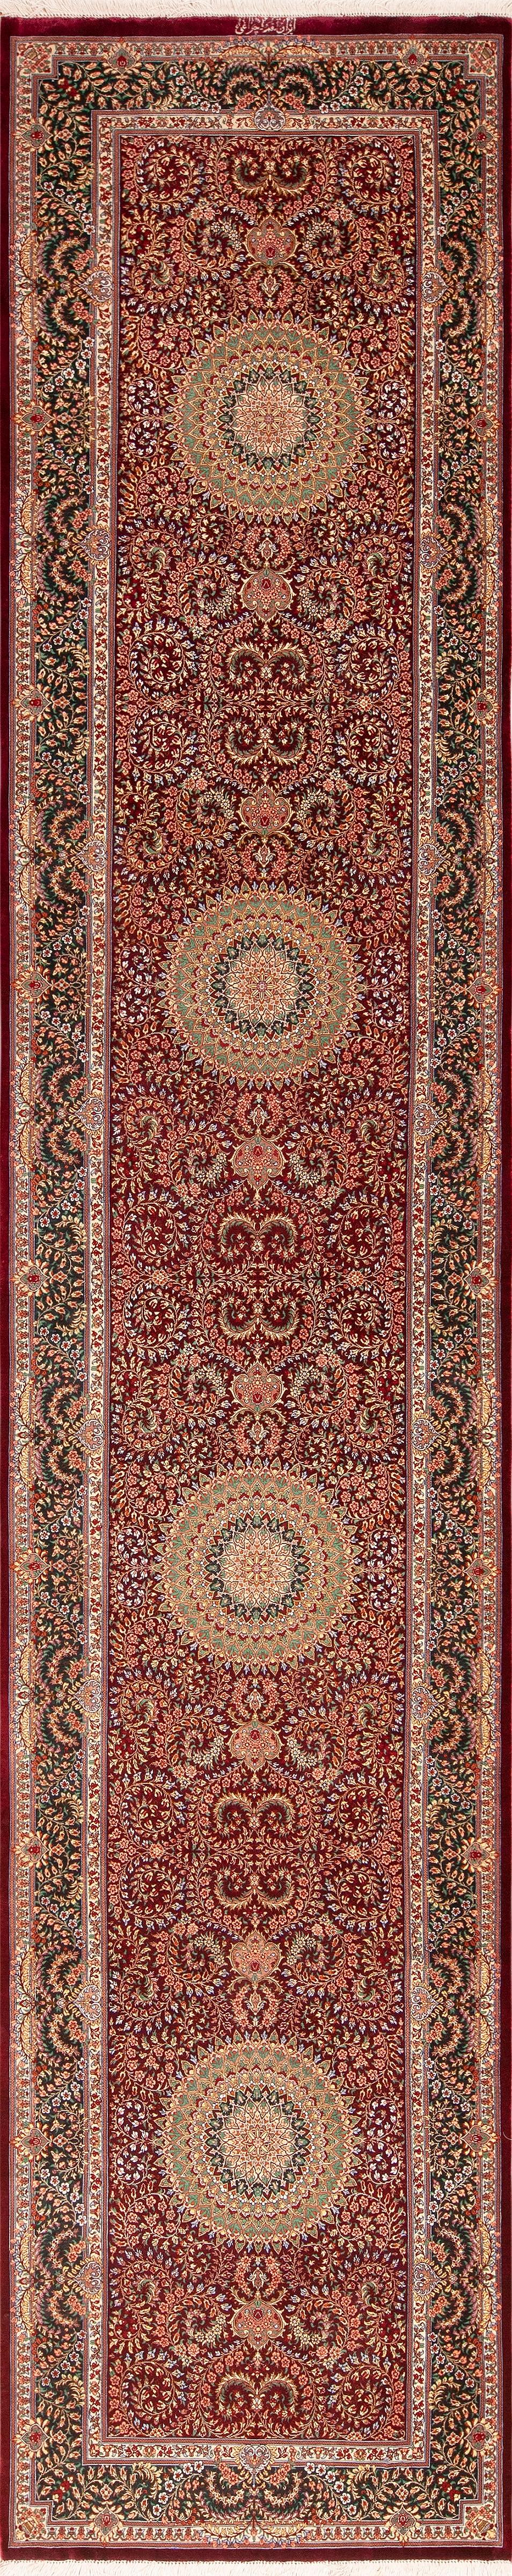 Stunning Fine Floral Vintage Persian Gonbad Design Silk Qum Luxury Hallway Runner Rug, country of origin: Persian Rugs, Circa date: Vintage